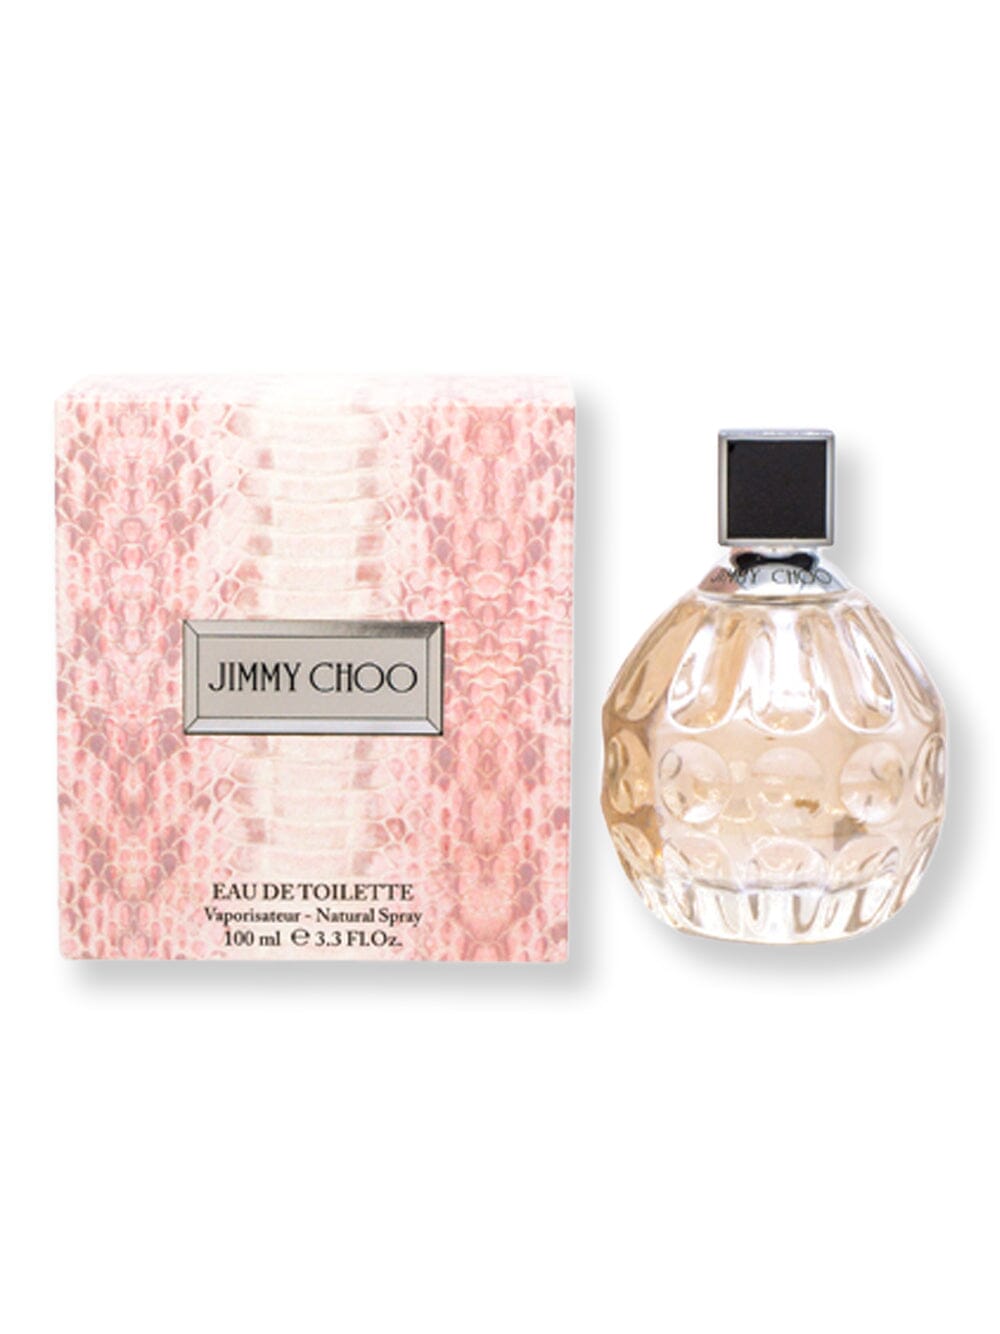 Jimmy Choo Jimmy Choo EDT Spray 3.3 oz Perfume 